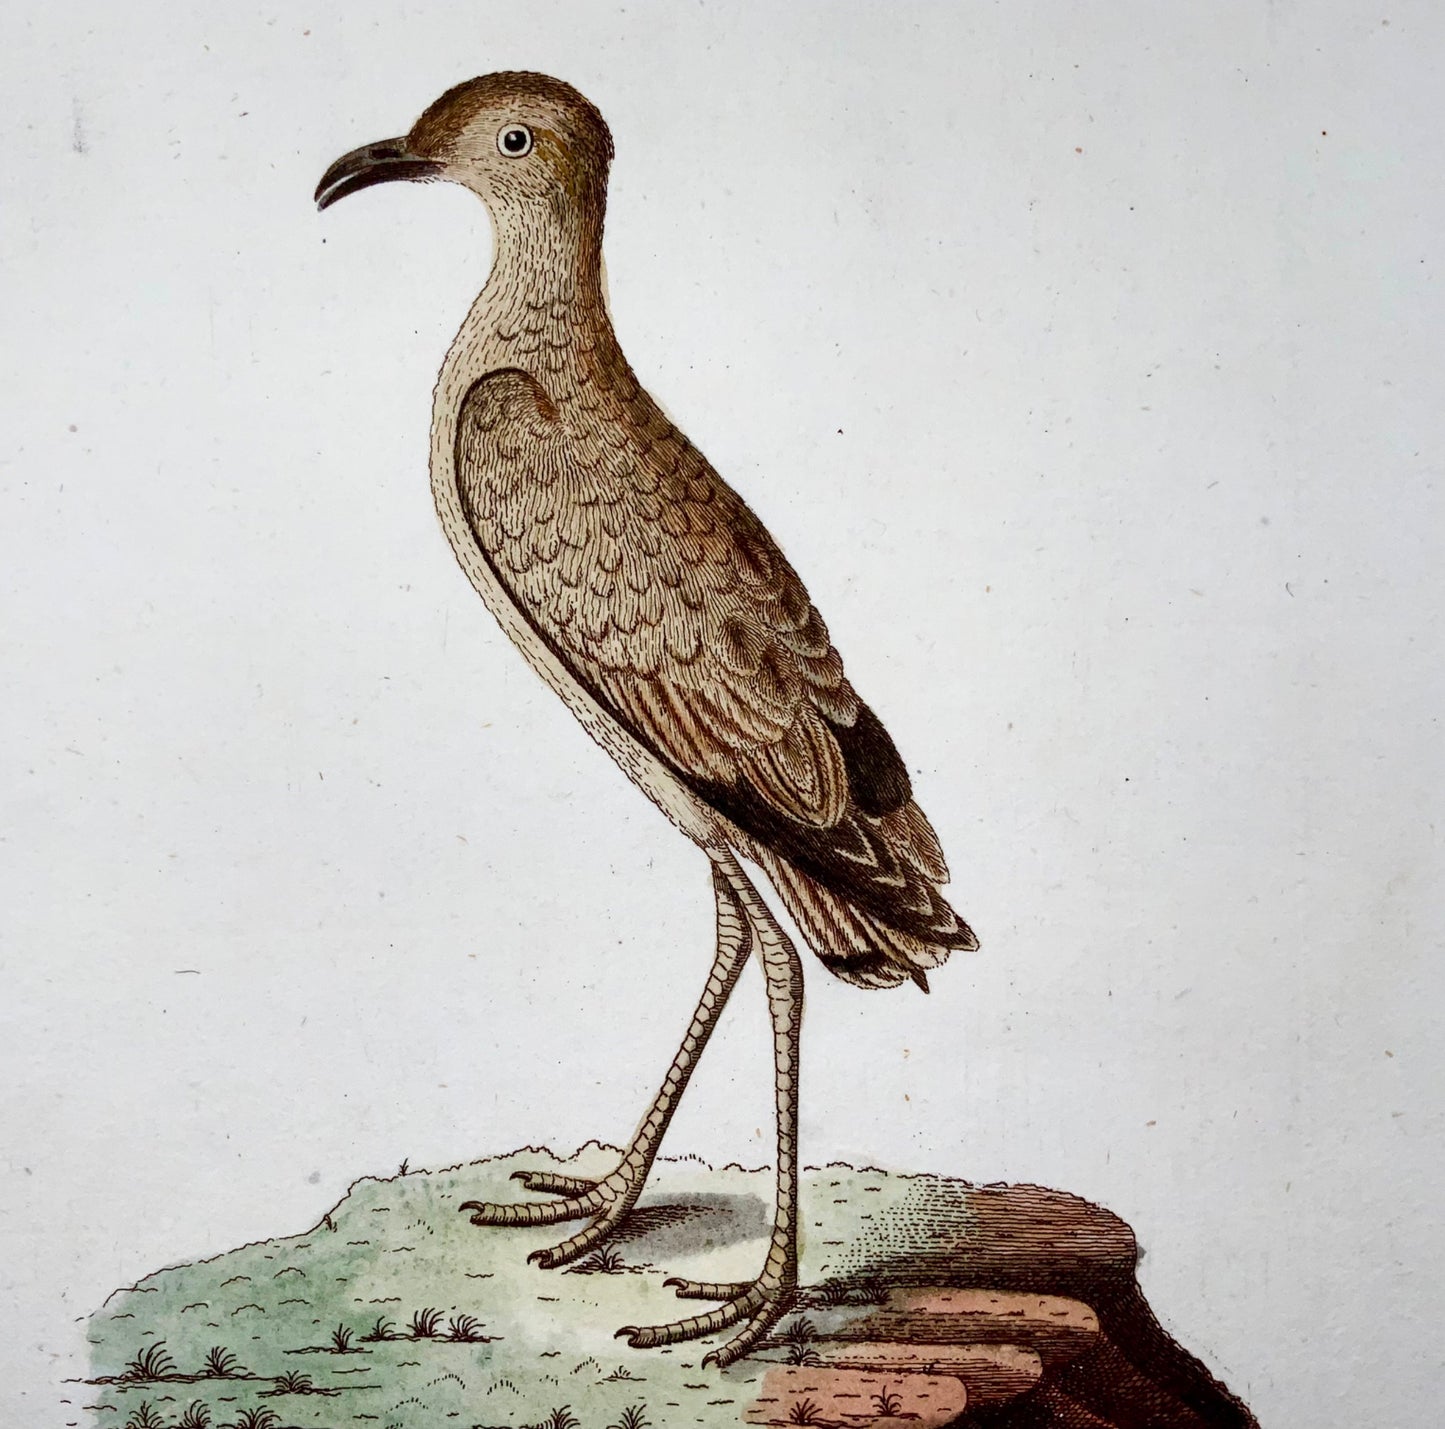 1793 John Latham, Plover, ornithology, rare quarto, hand col. copper engraving